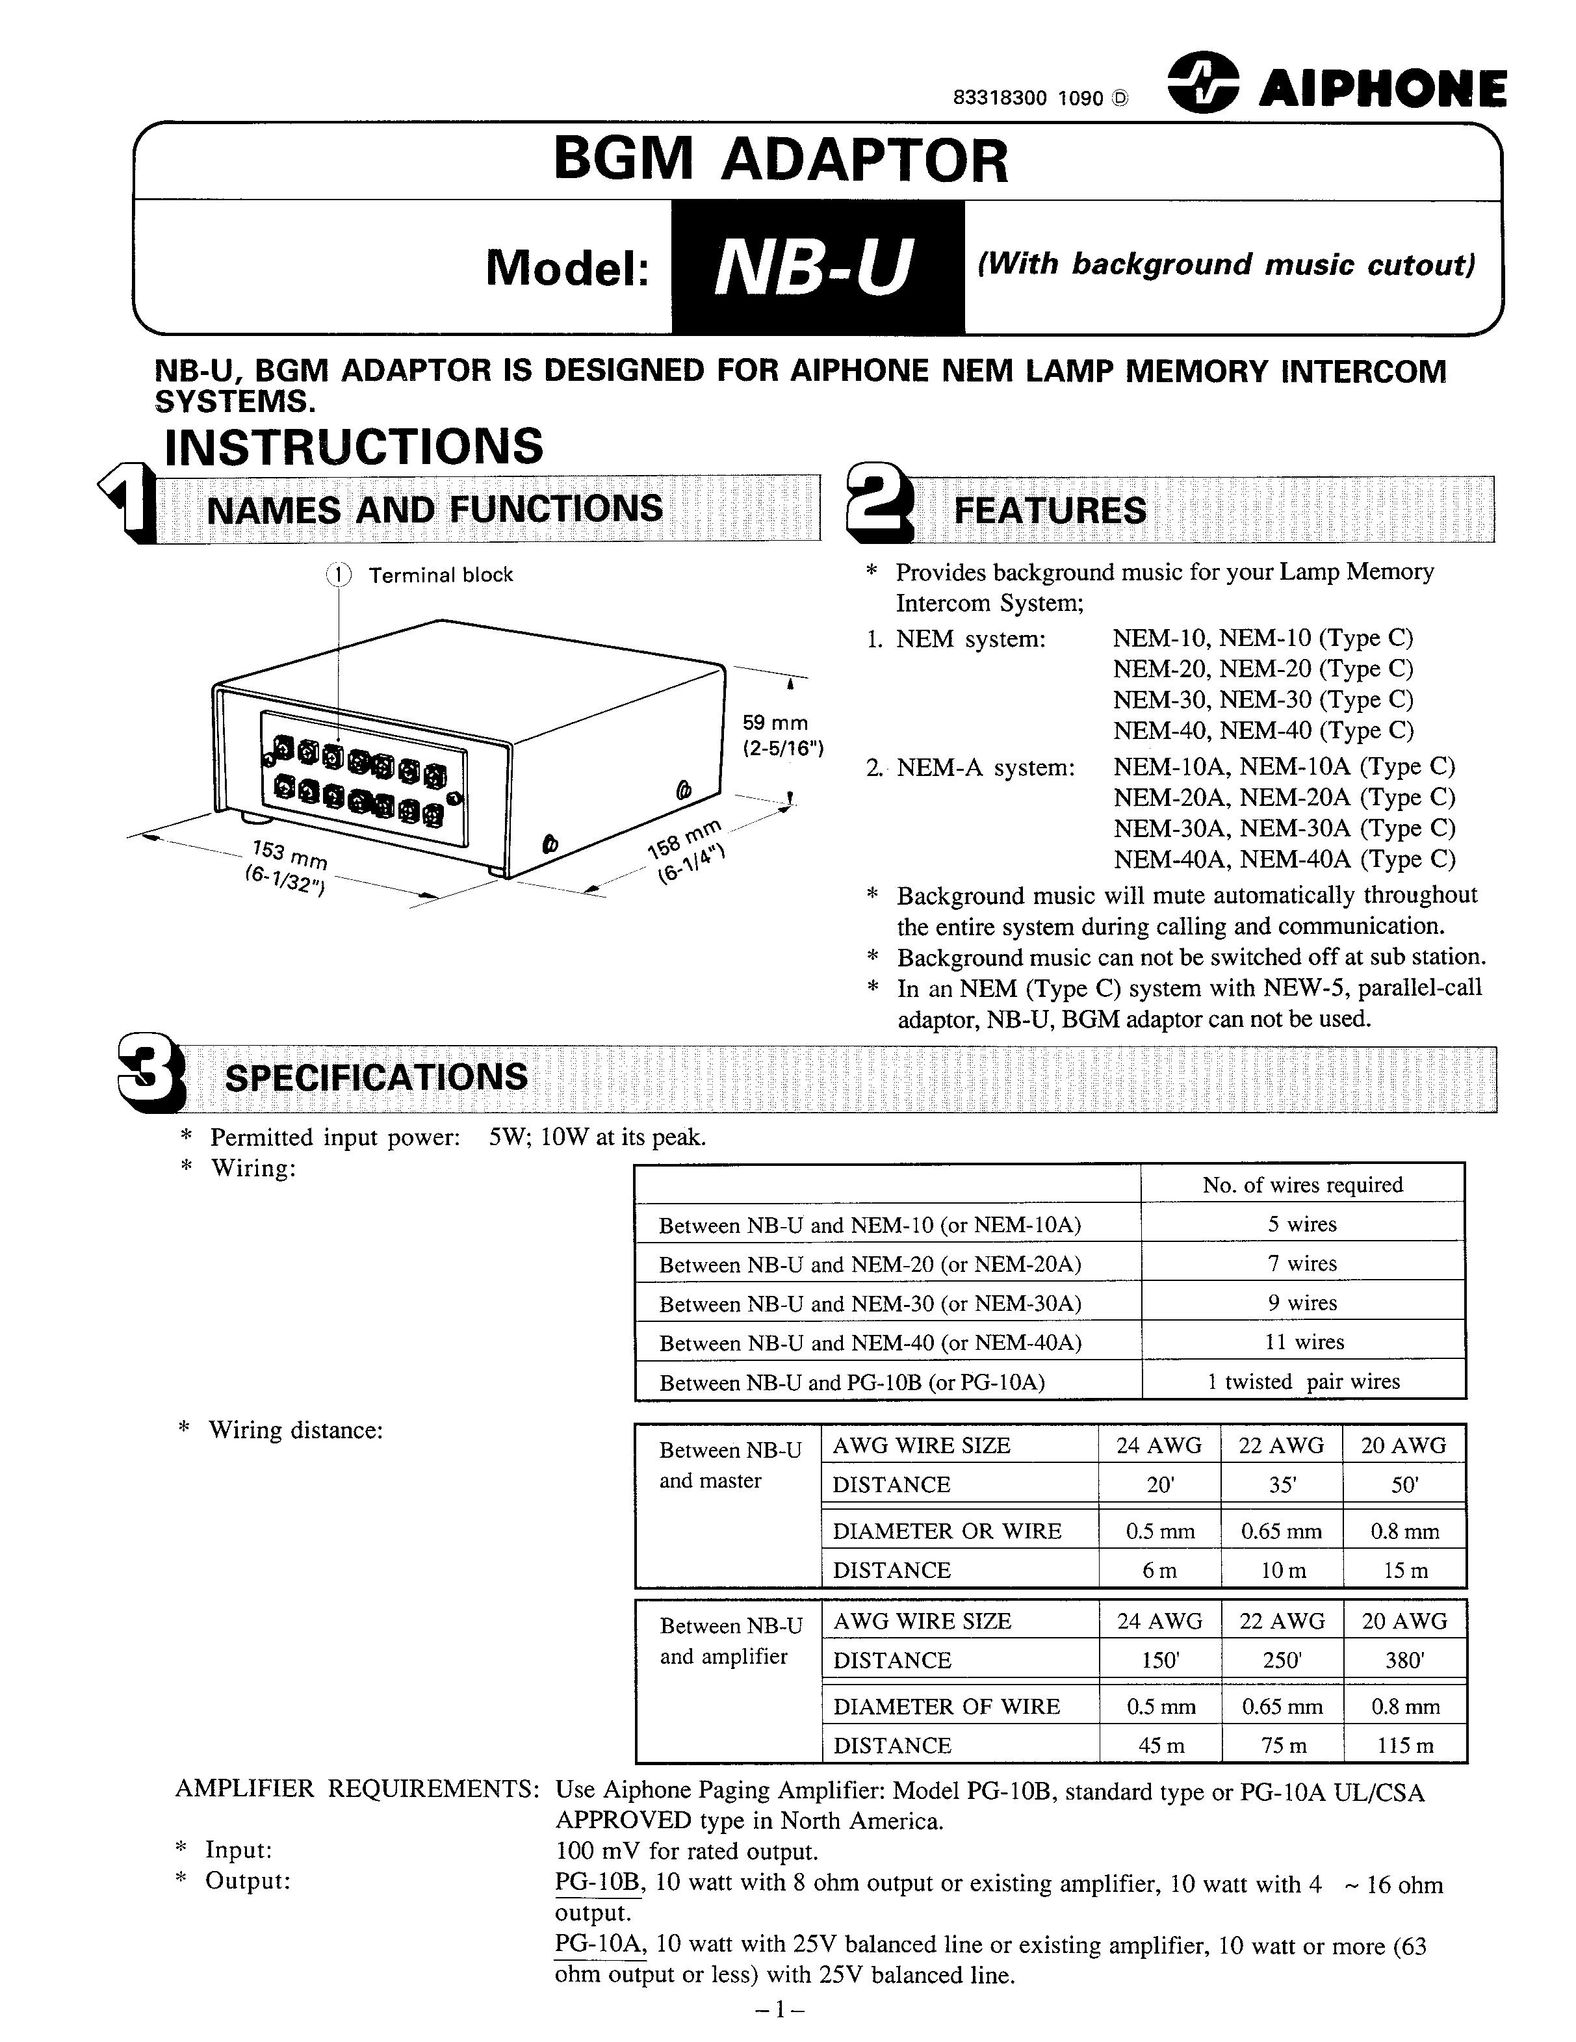 Aiphone NB-U MP3 Player Accessories User Manual